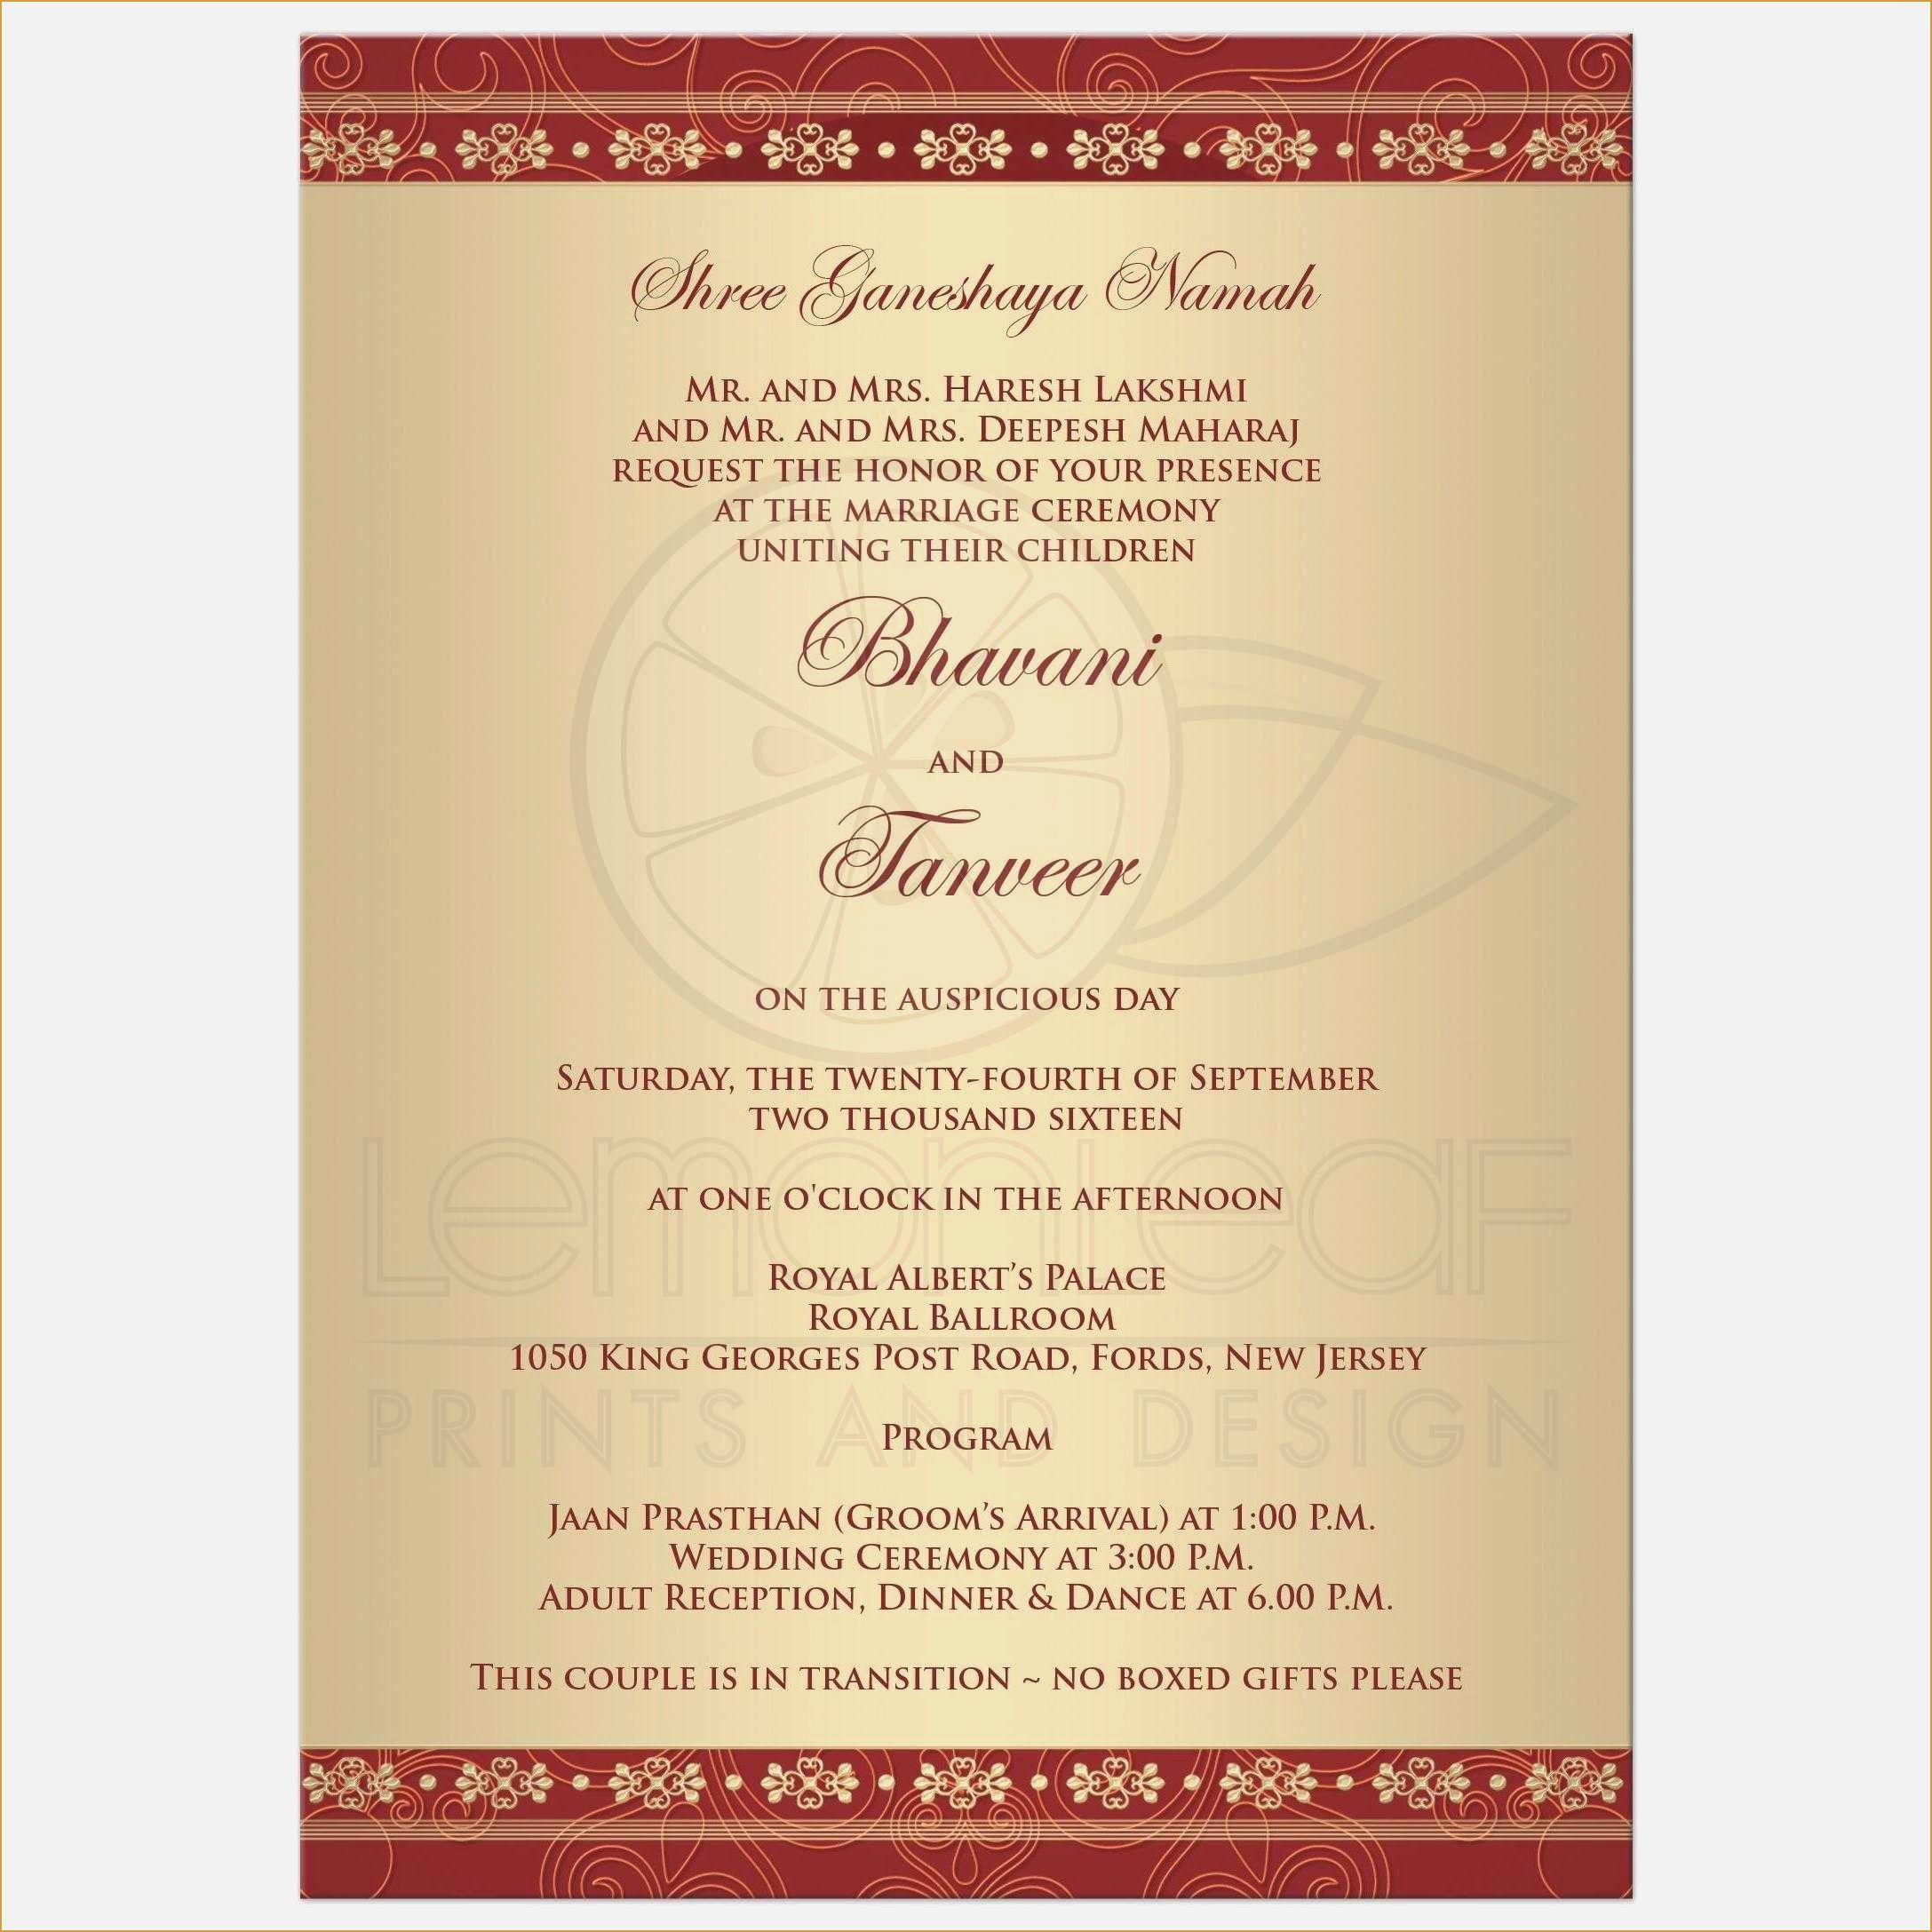 Image Result For Hindu Wedding Reception Invitation Wedding